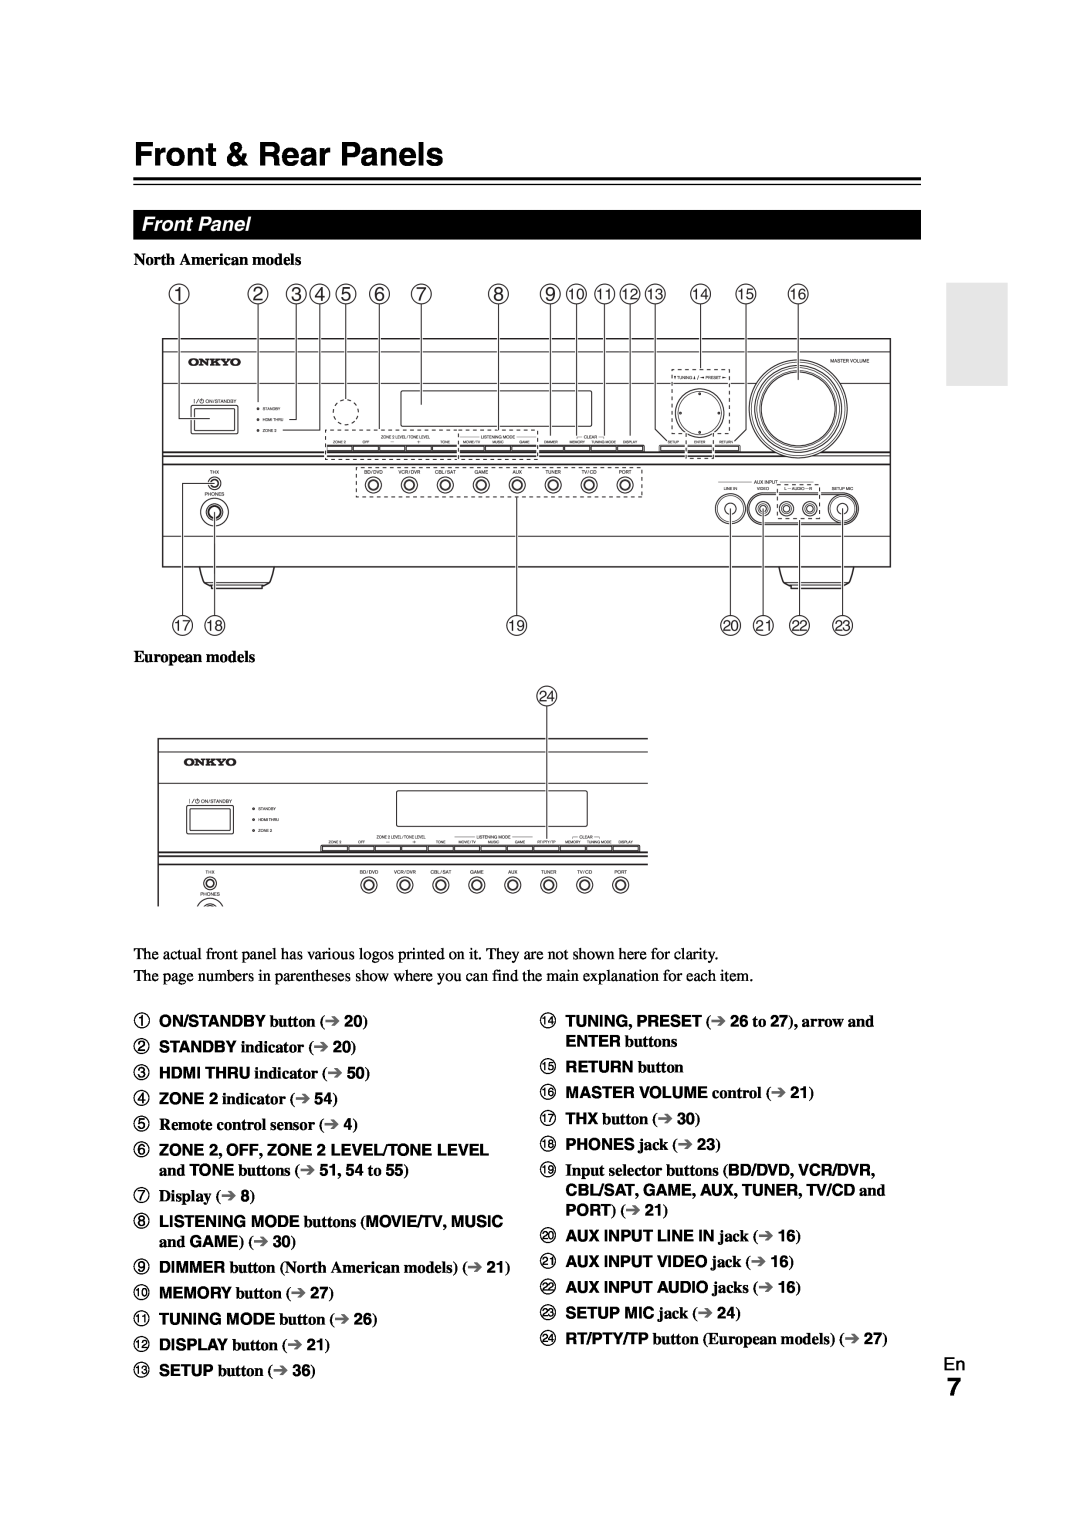 Onkyo HT-R980 Front & Rear Panels, Front Panel, b cde f g, ij klm n o p, t u v w, aON/STANDBY button, cHDMI THRU indicator 